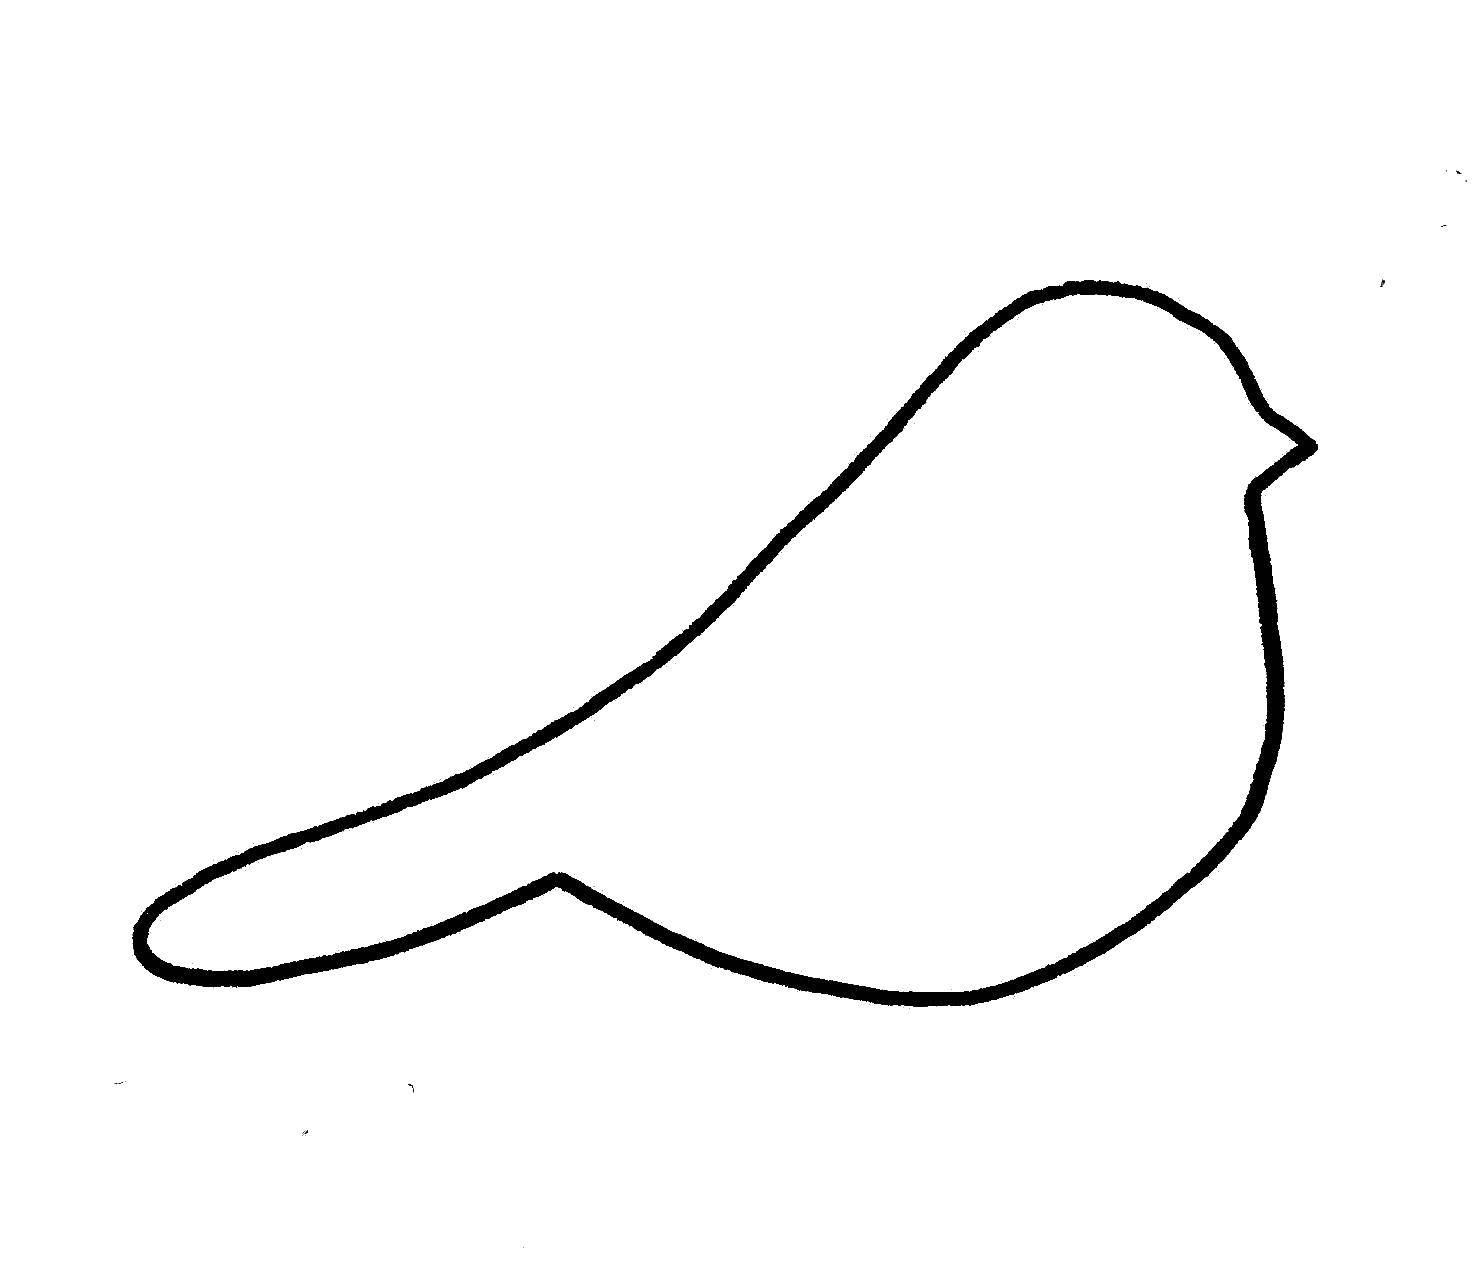 Название: Раскраска Контур птицы. Категория: Контуры птиц. Теги: контуры, шаблоны, птицы.